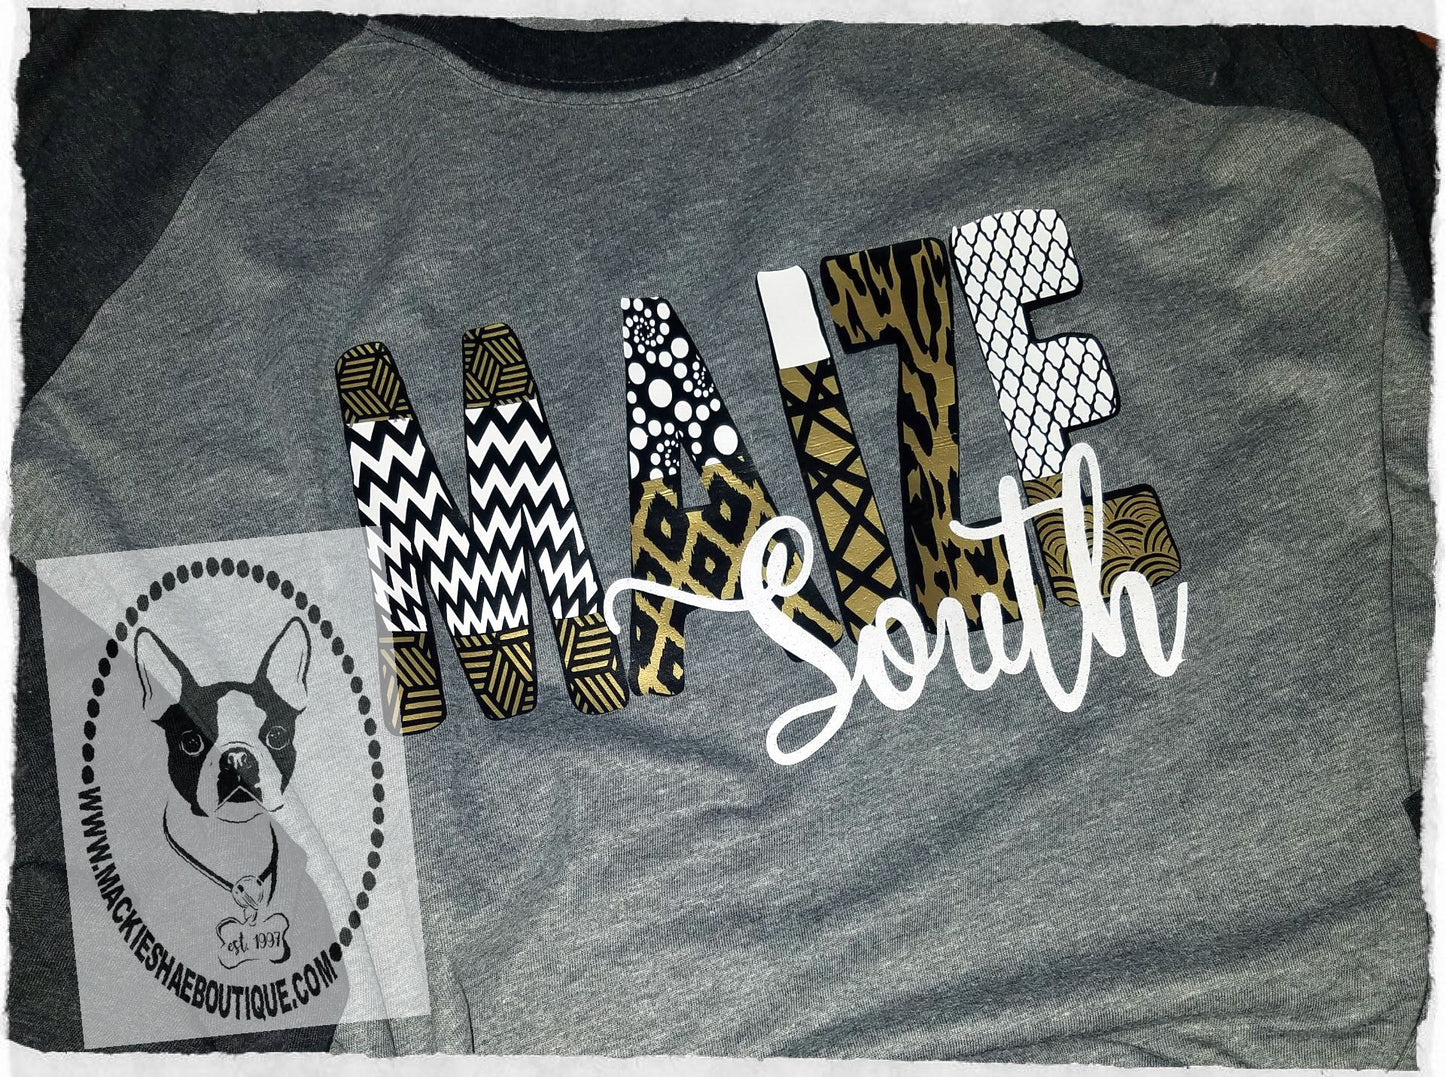 Maize South Patterned Custom Shirt, 3/4 Sleeve